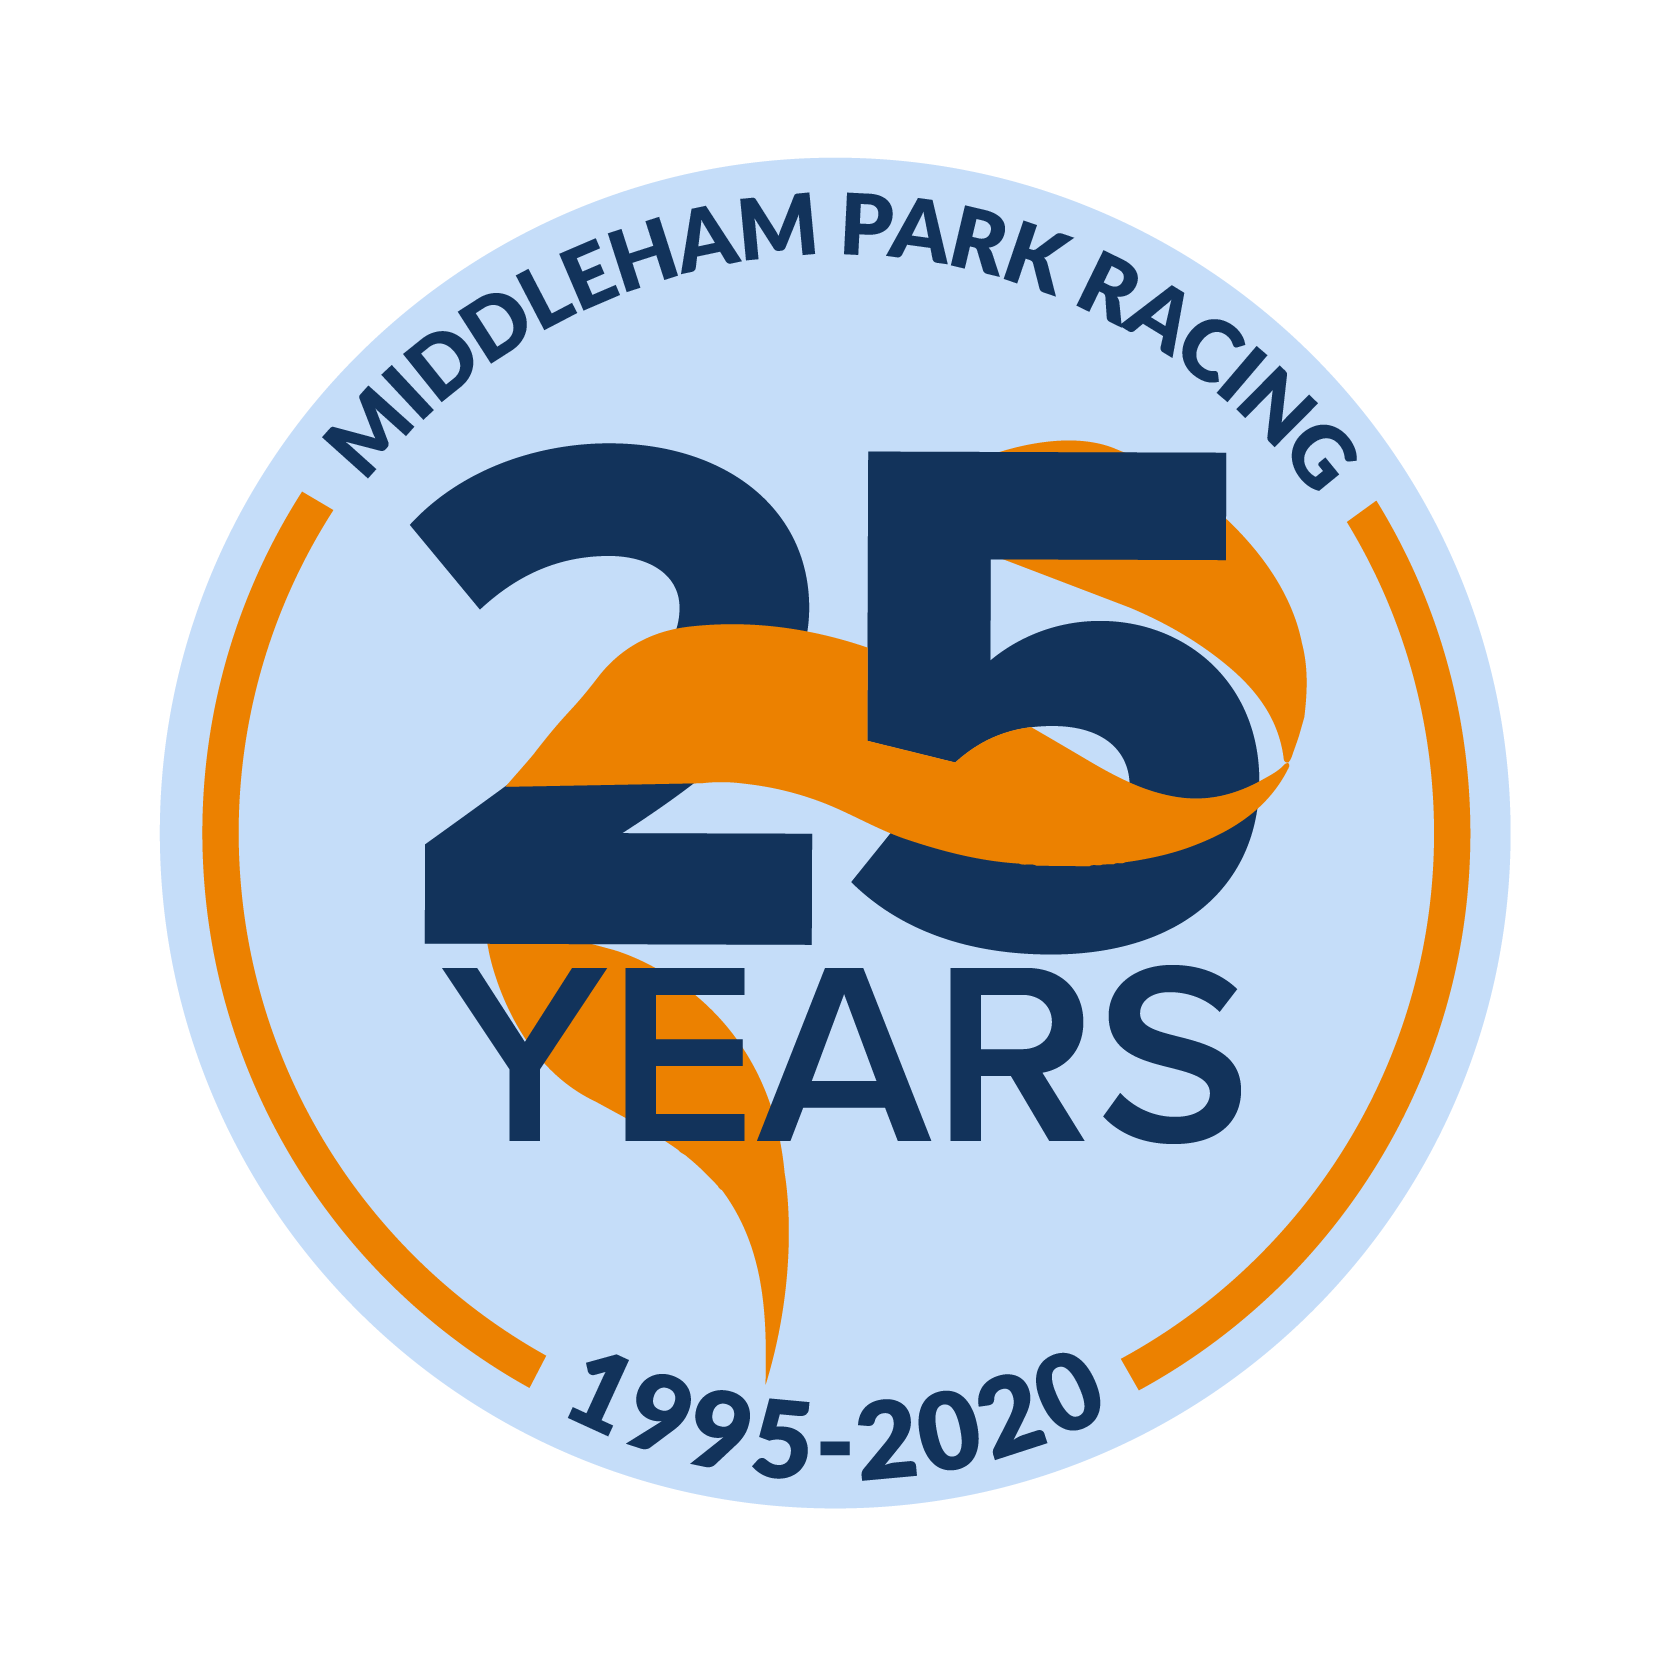 Middleham Park Racing 25 years